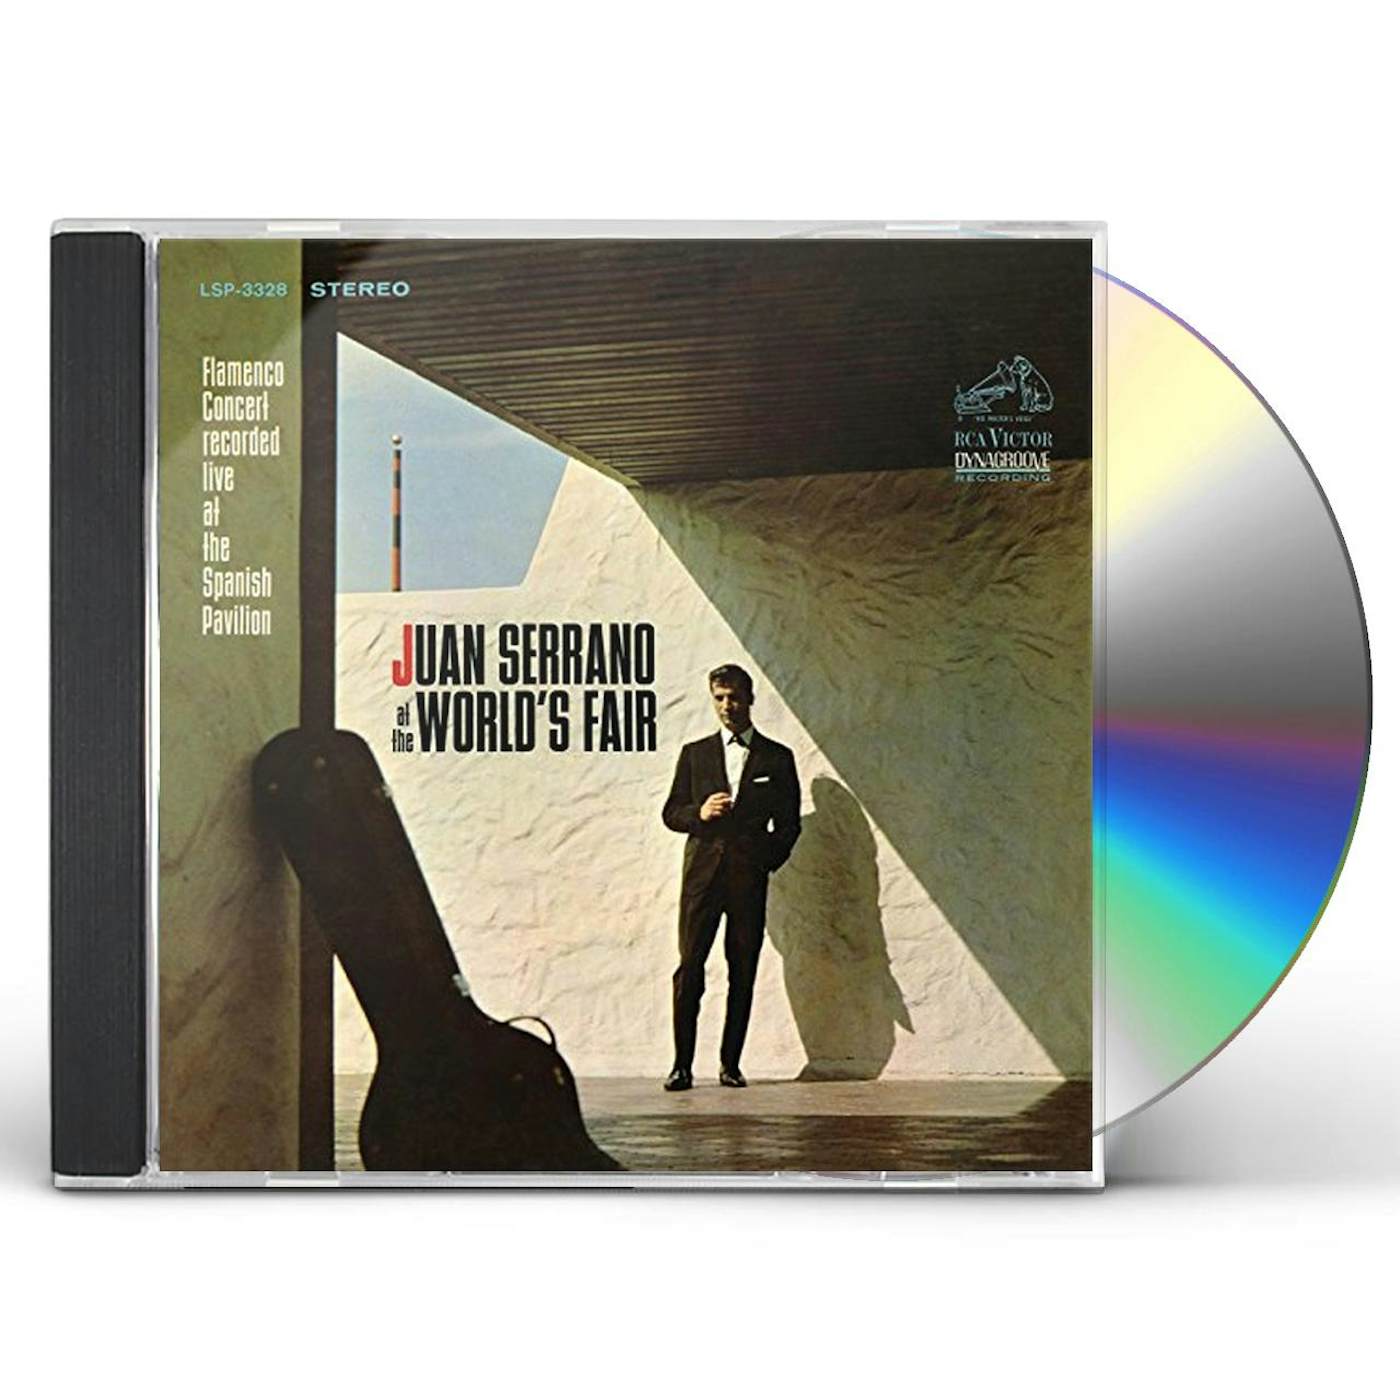 Juan Serrano AT THE WORLD'S FAIR CD